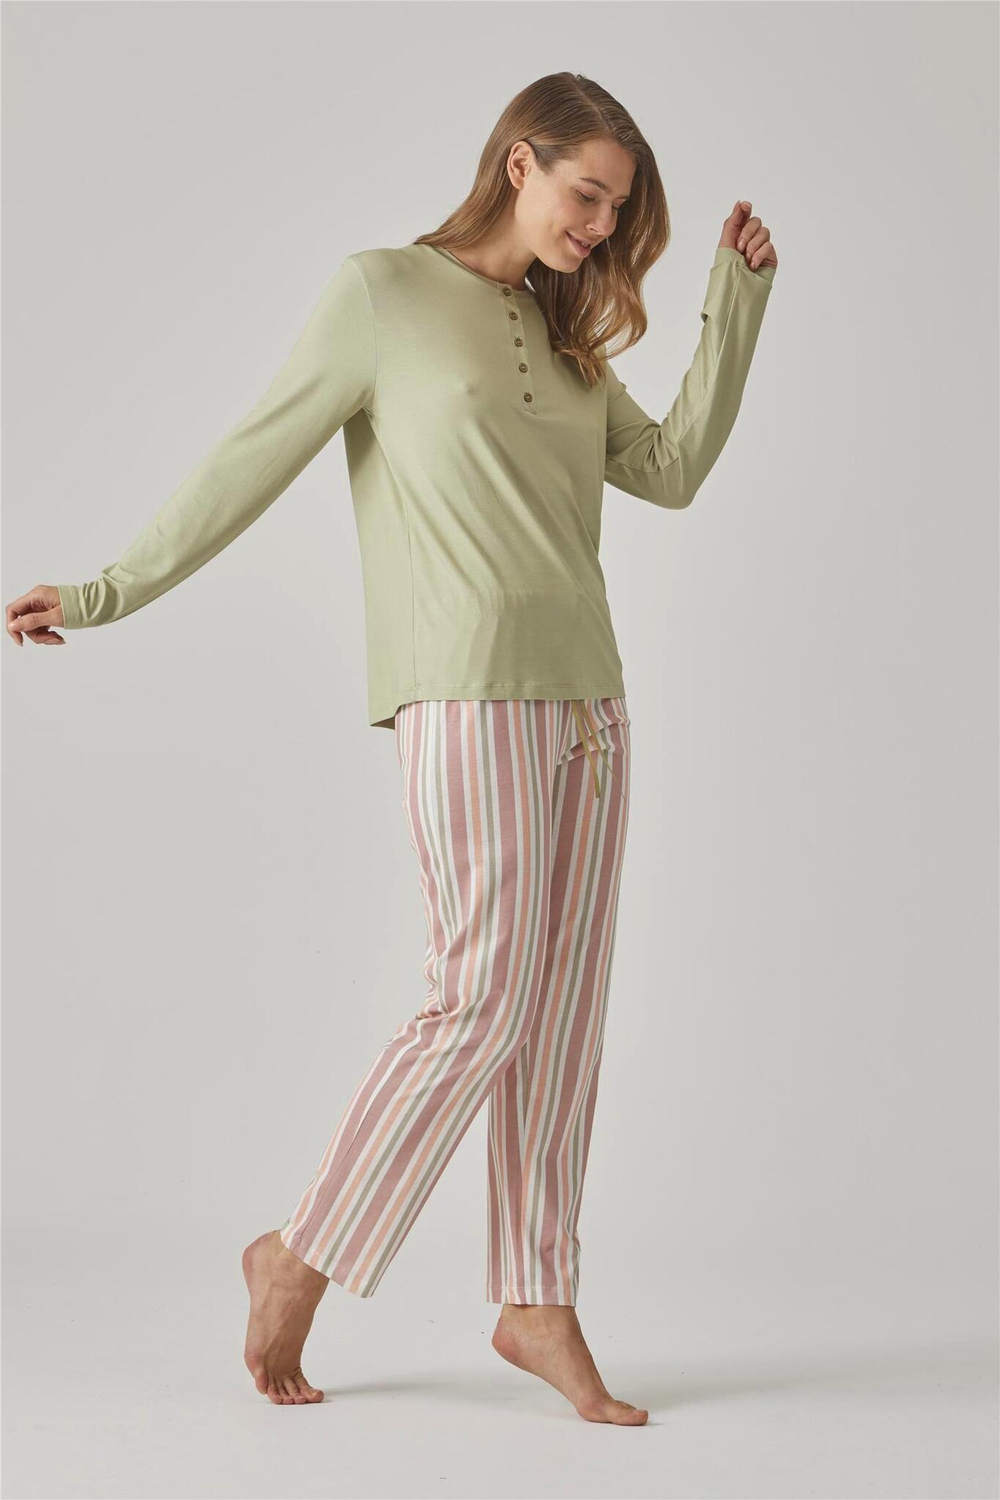 RELAX MODE - Женская пижама с брюками - 10790